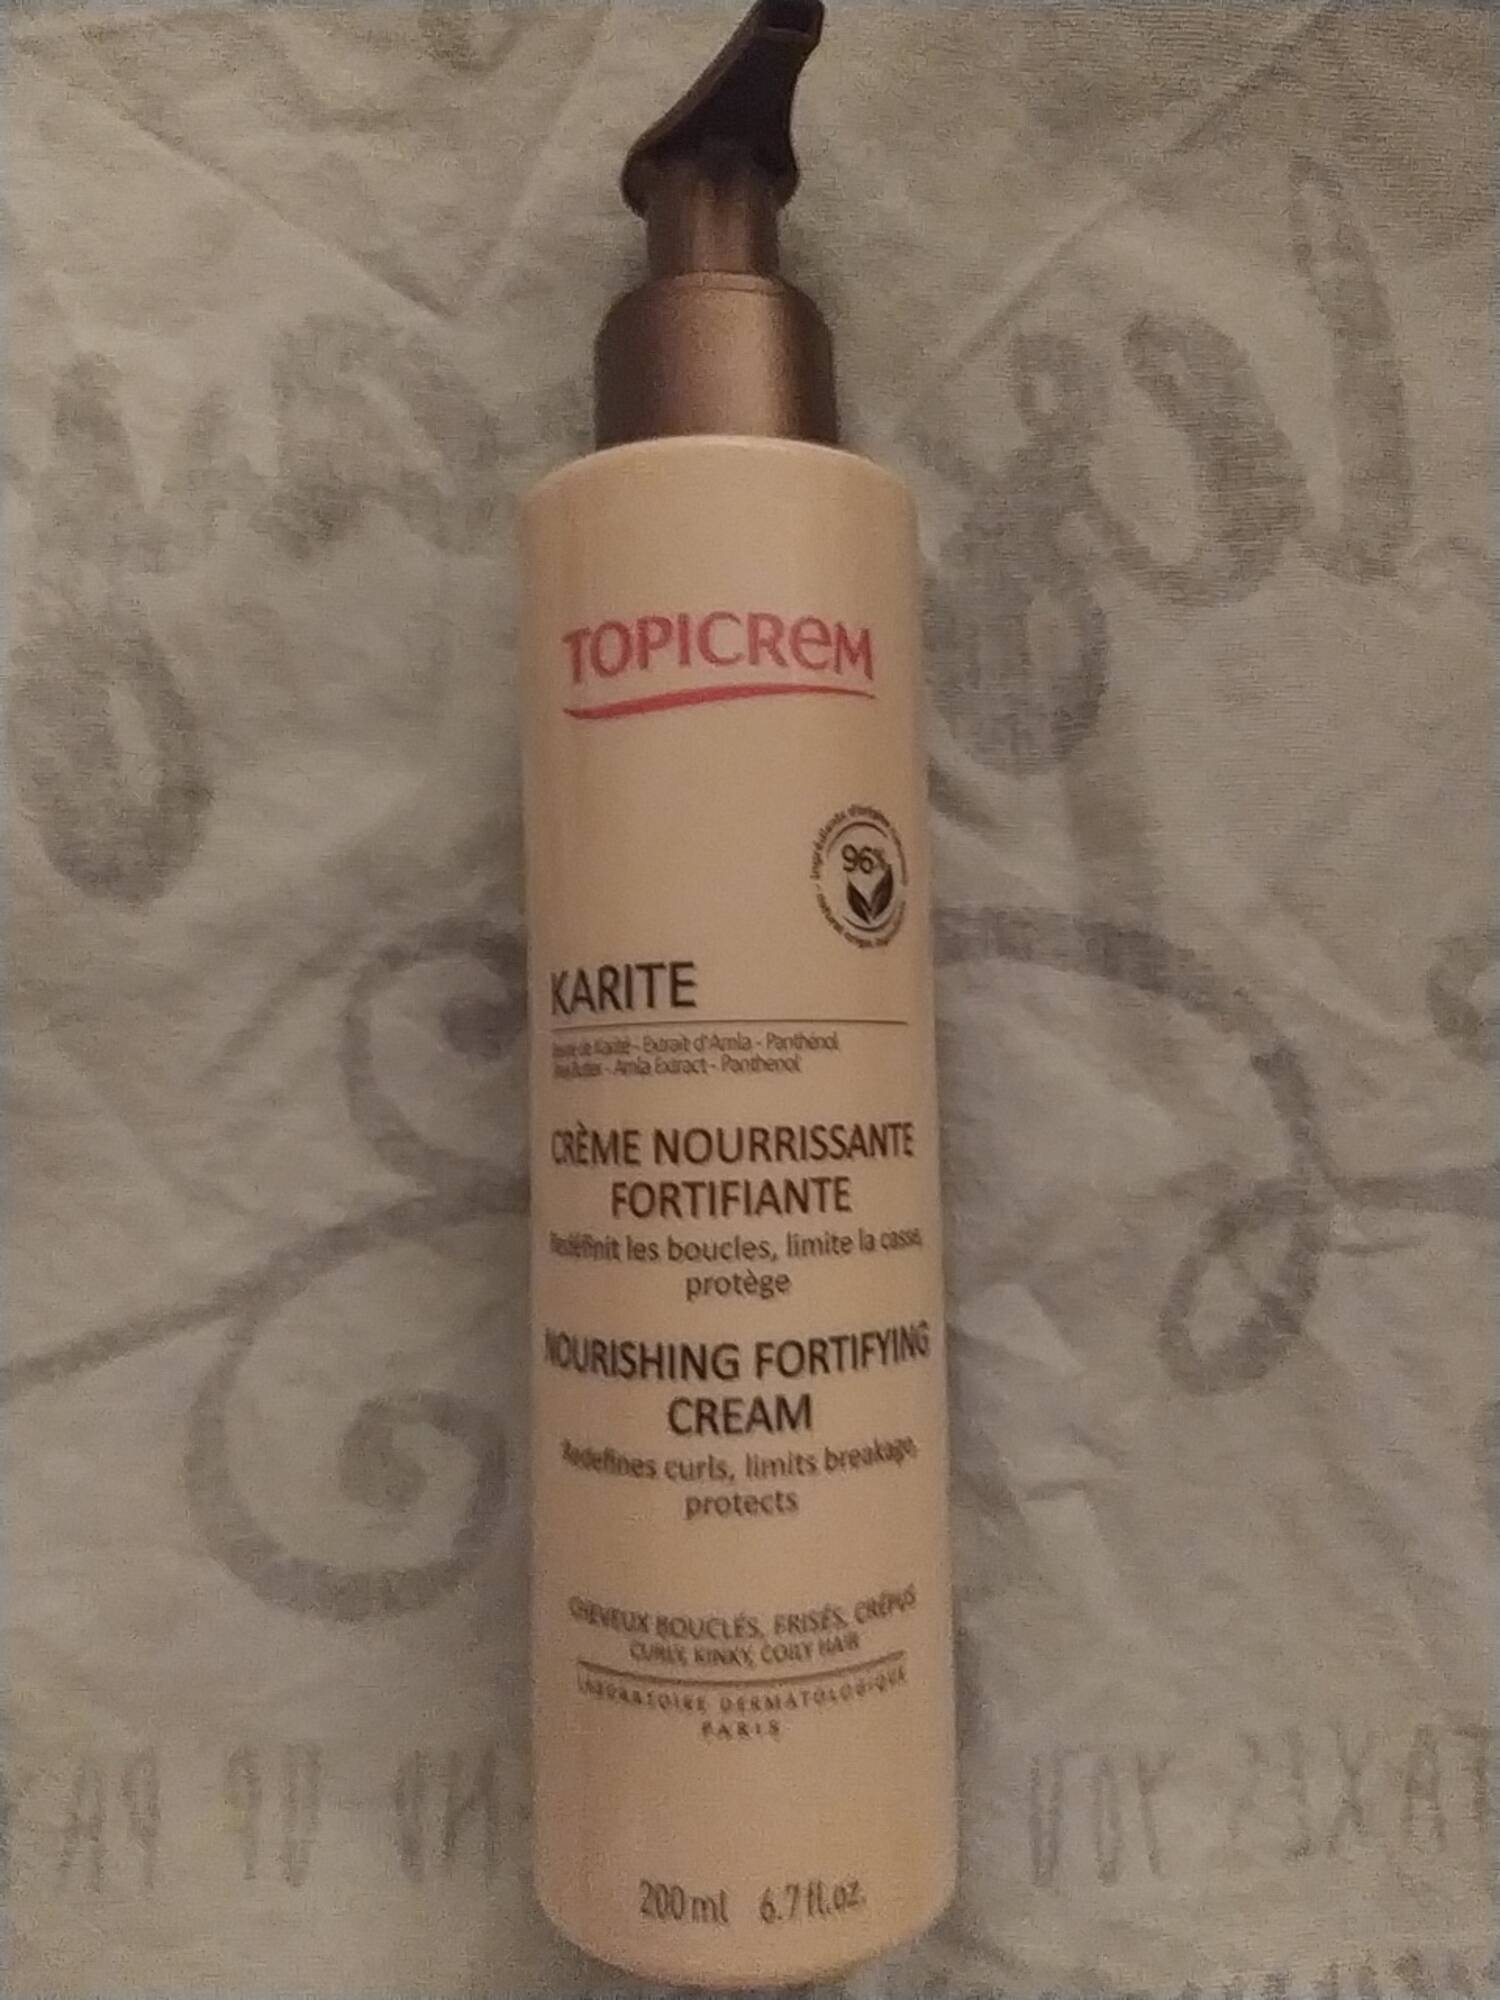 TOPICREM - Karite - Crème nourrissante fortifiante